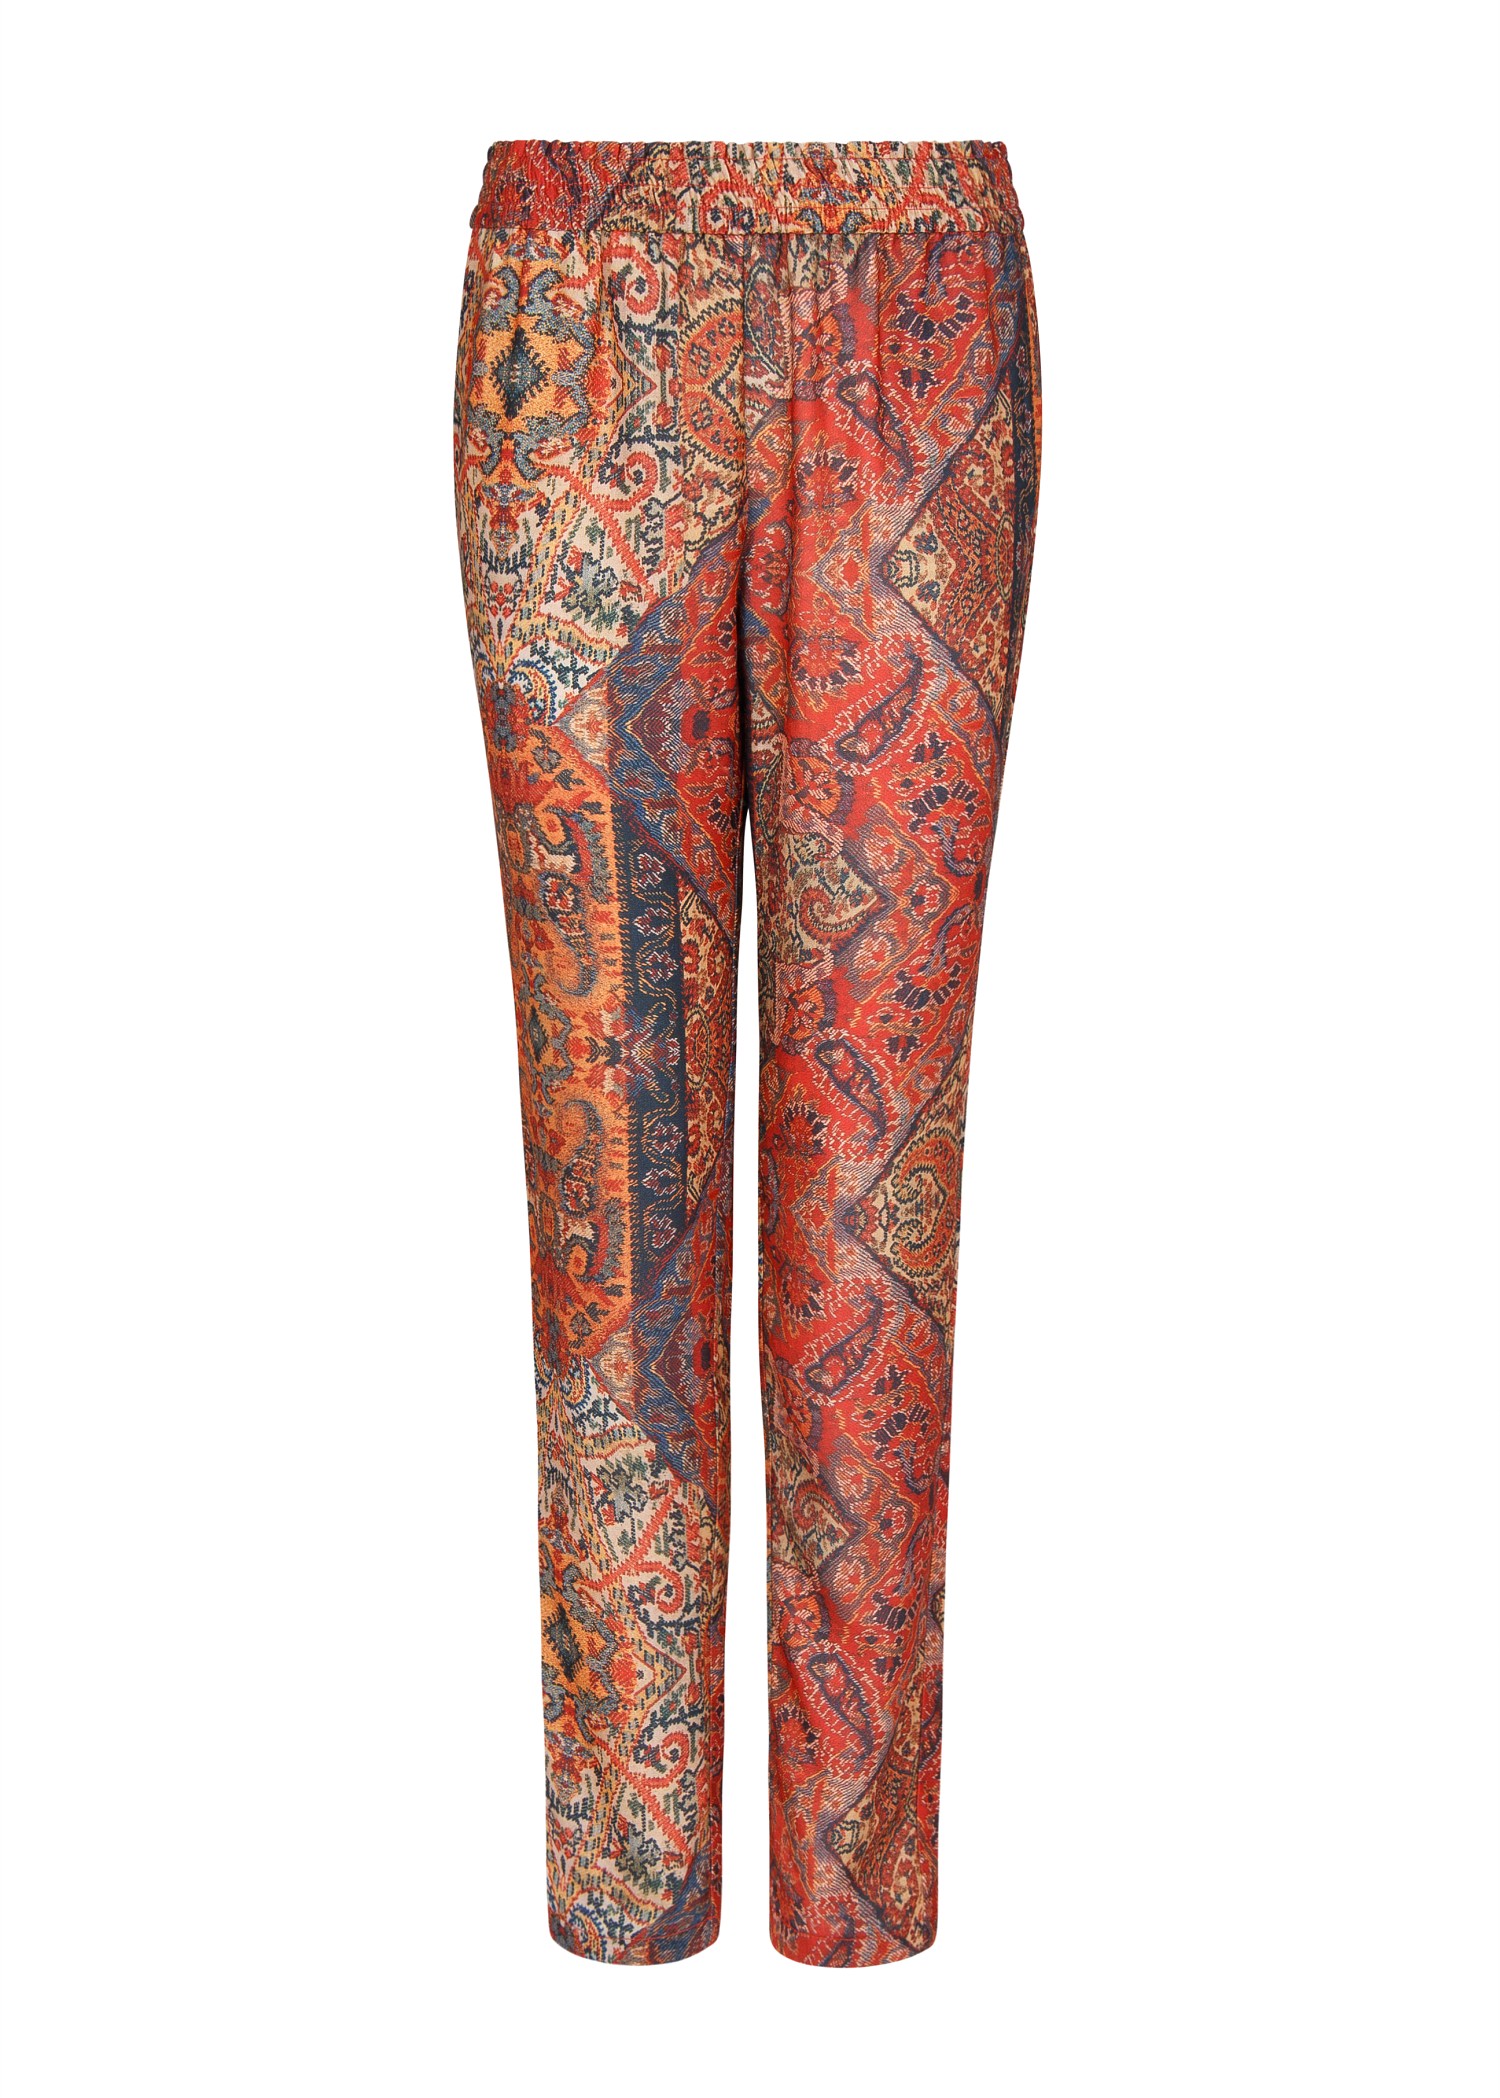 Lyst - Mango Ethnic Print Flowy Trousers in Red